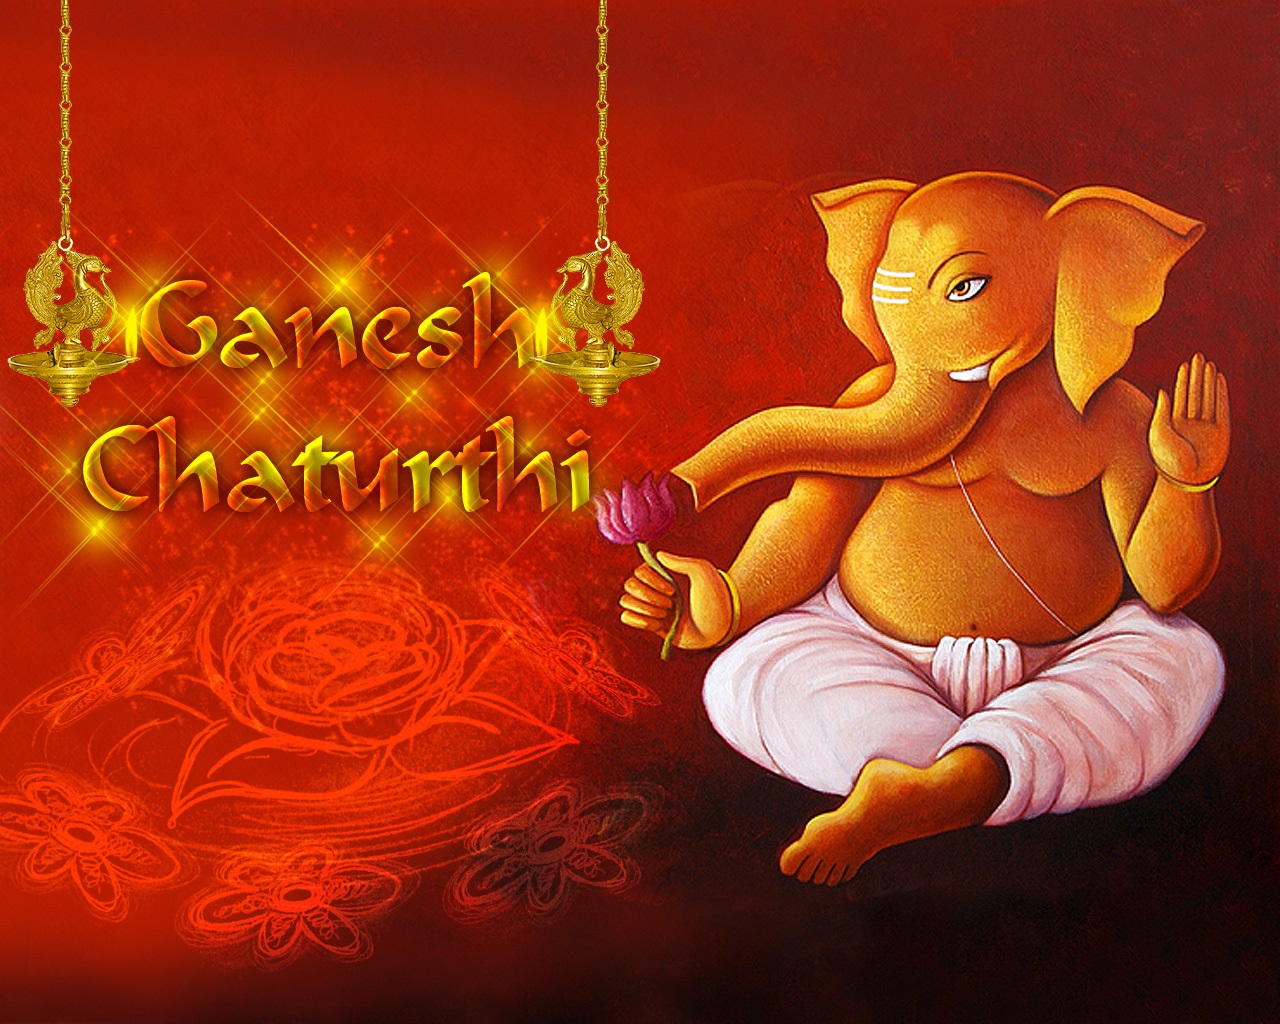 Festival Chaska: Best HD Ganeshji Wallpaper, Ganesha HD Pictures